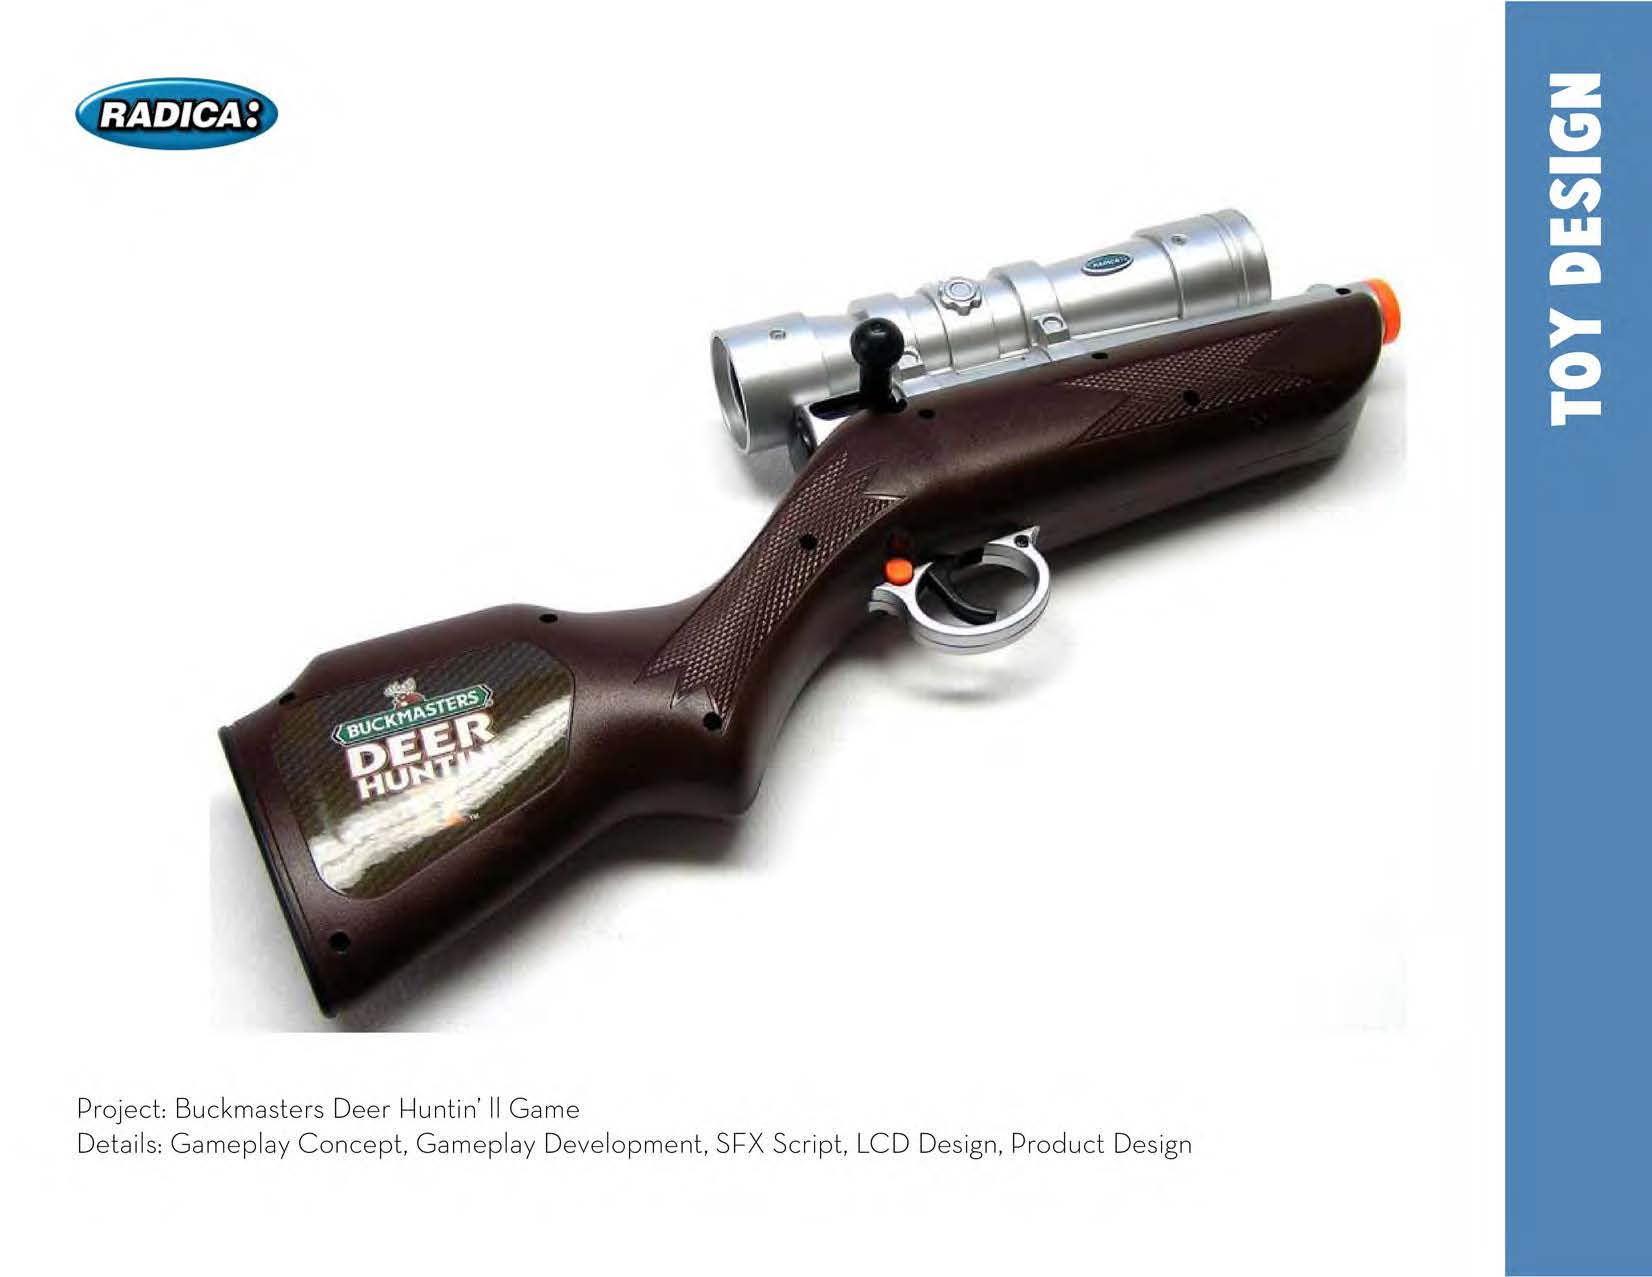 Buckmaster Deer Huntin' Electronic Handheld Action Gun 